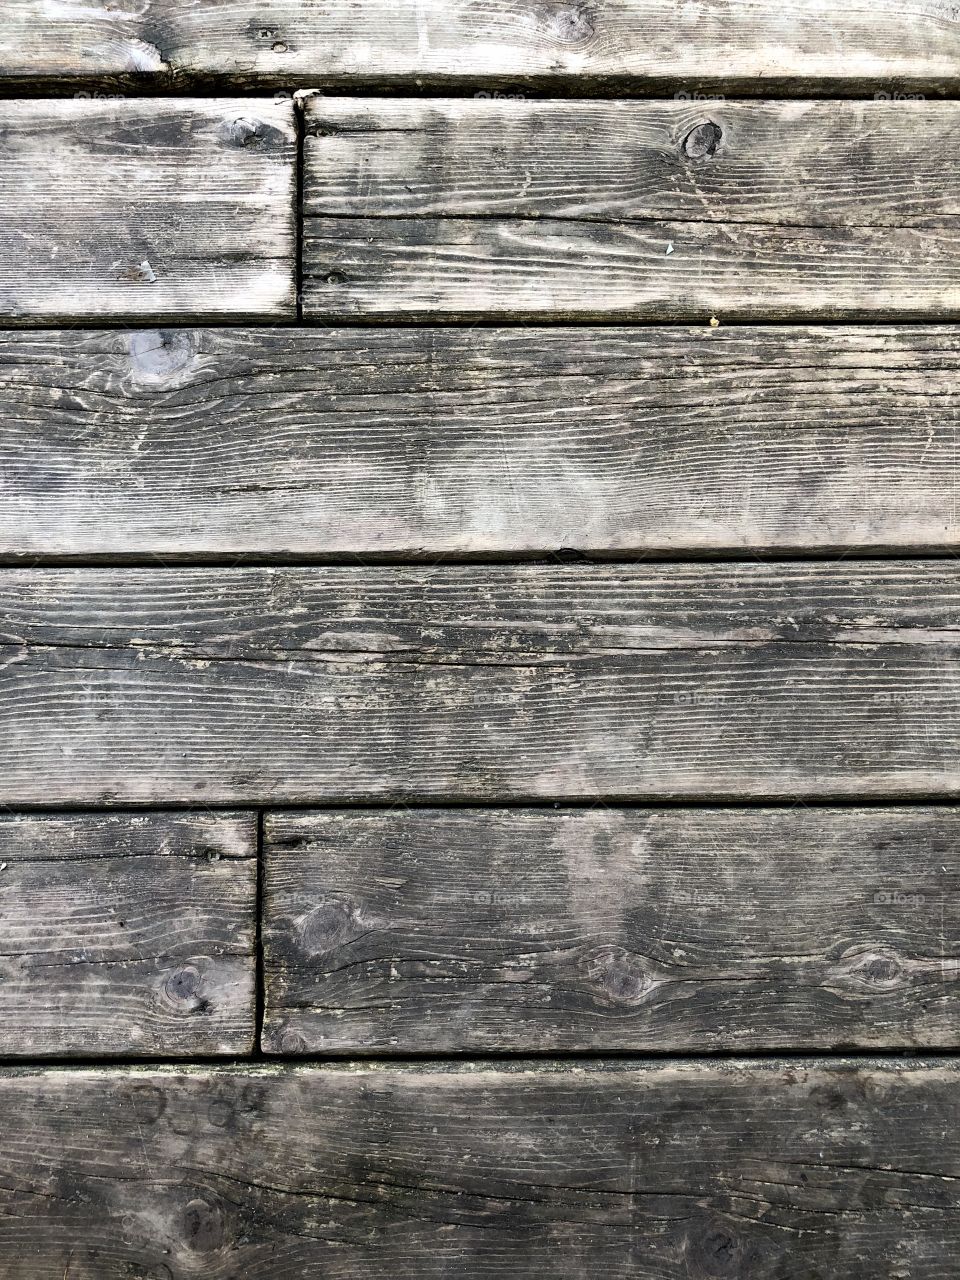 Old wooden dock